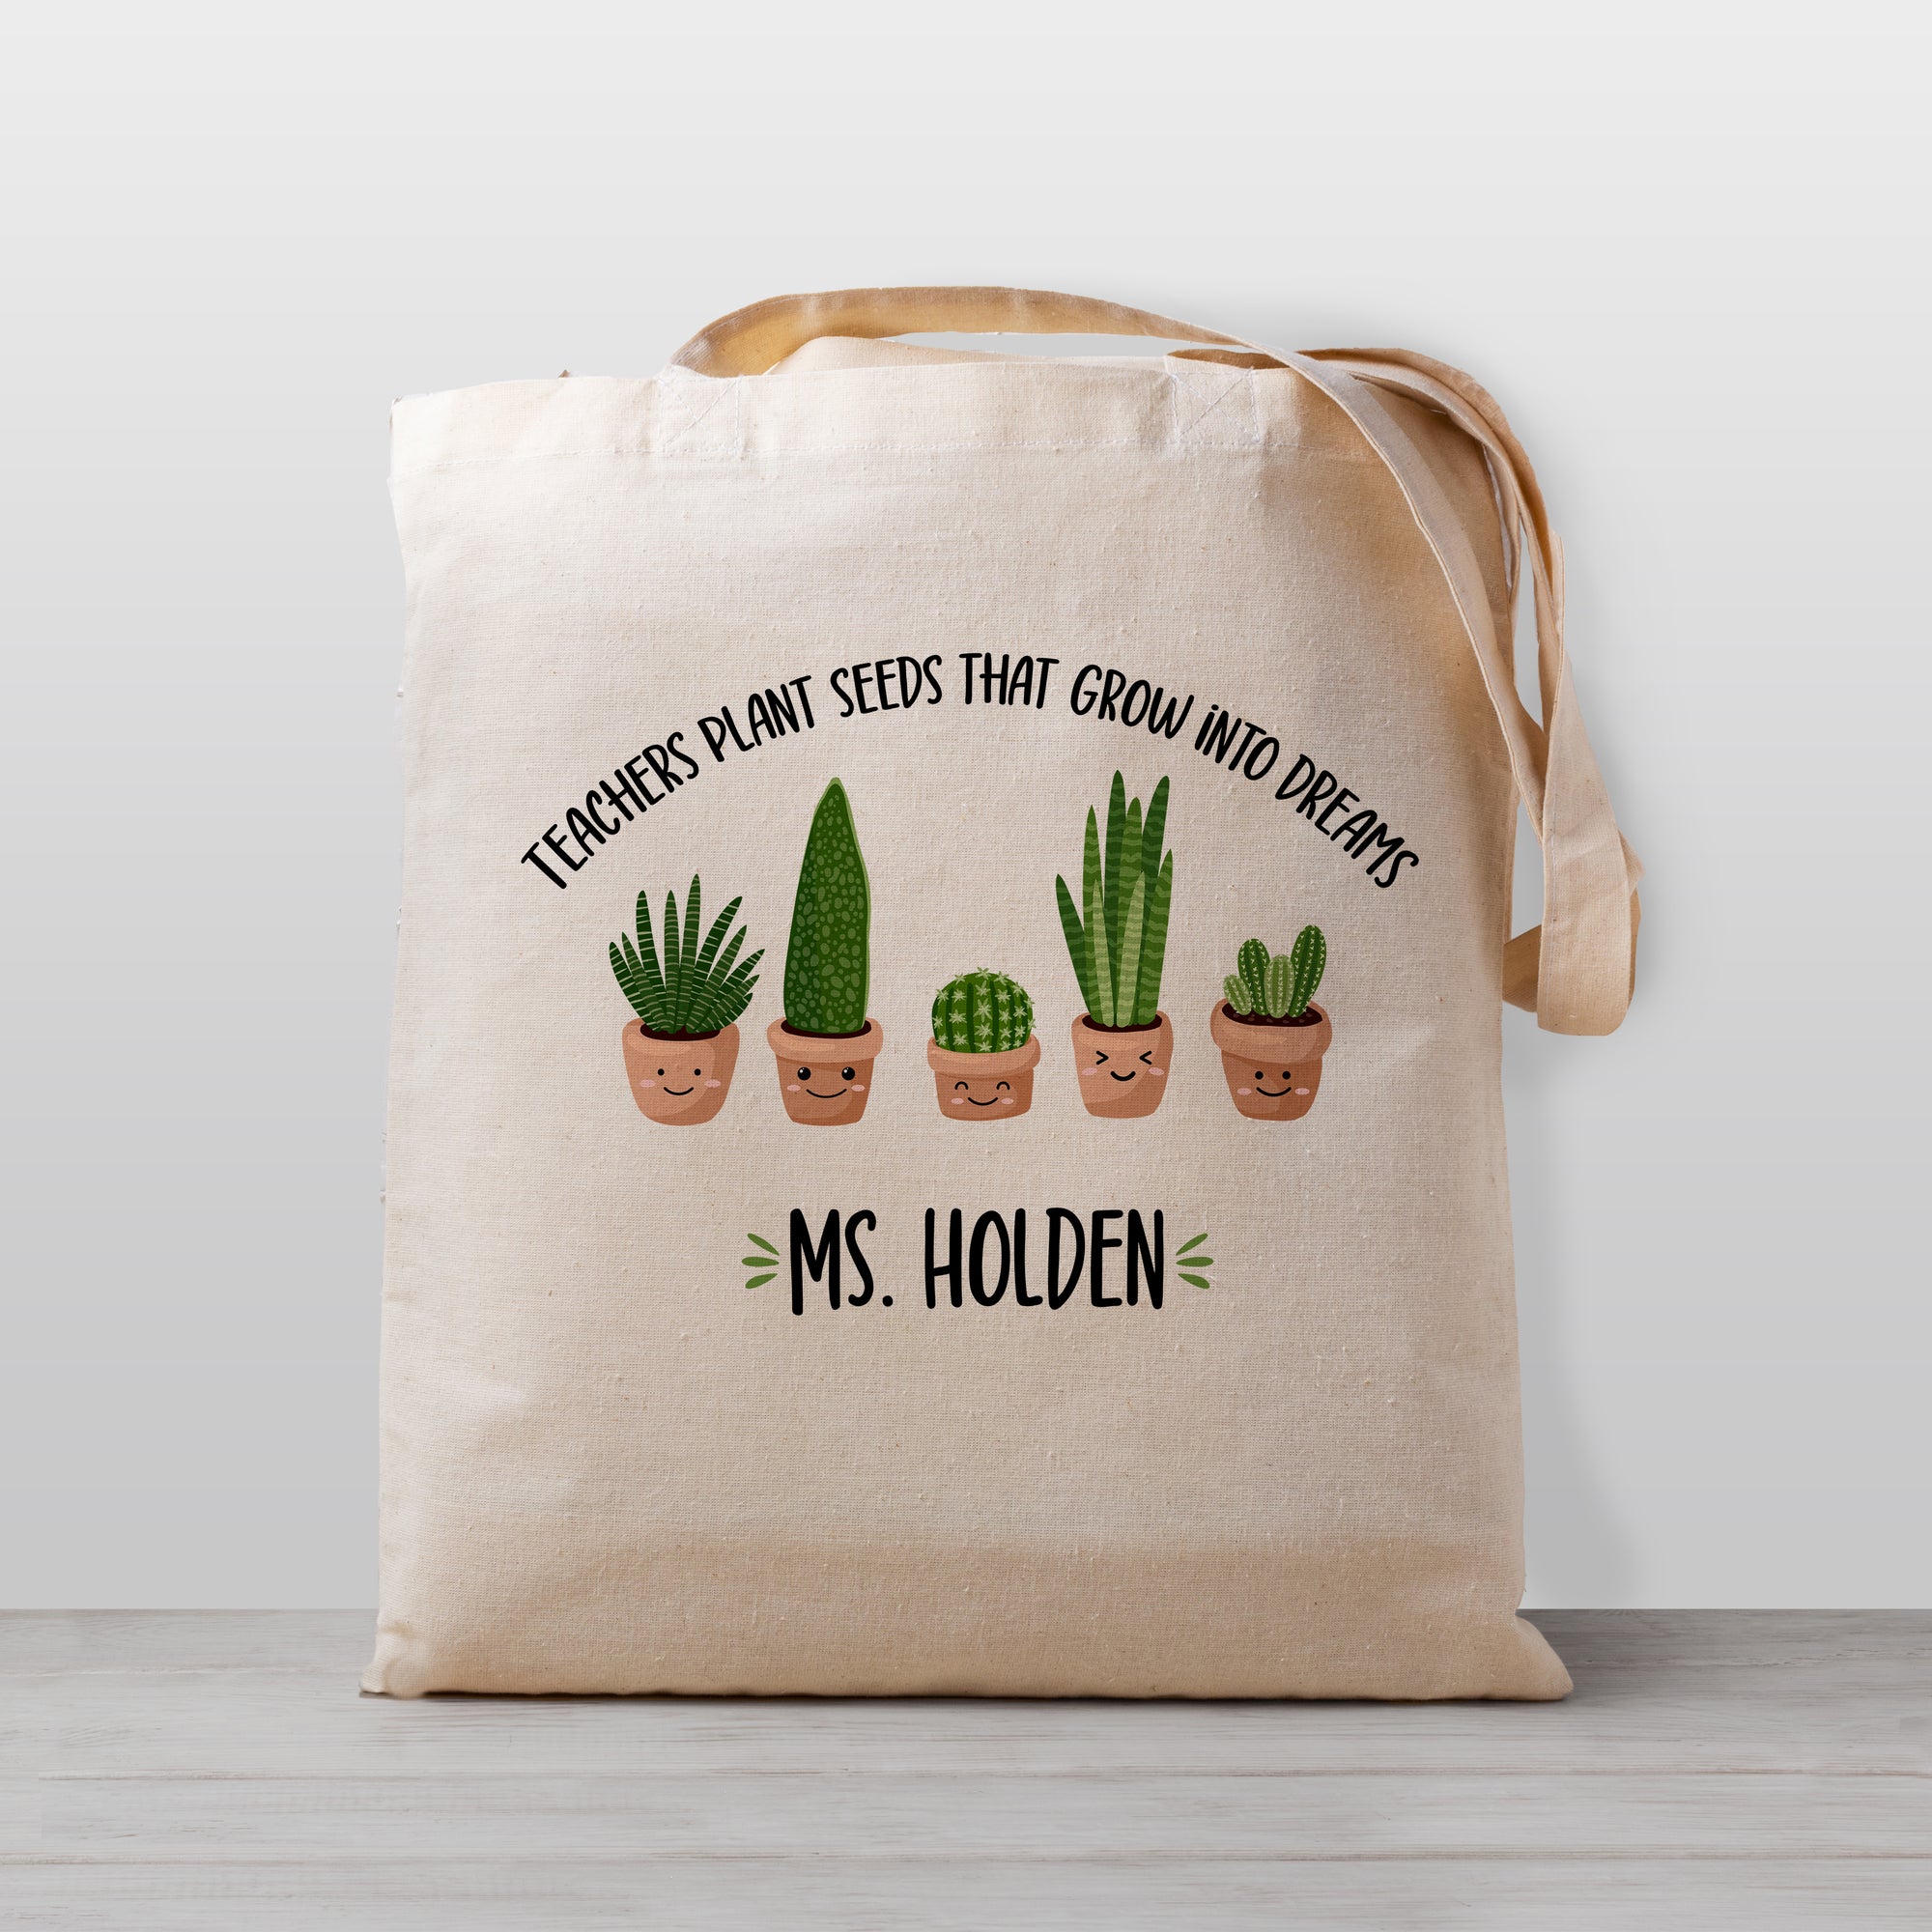 Teacher gift cactus succulent, "teachers plant seeds that grow into dreams" tote bag